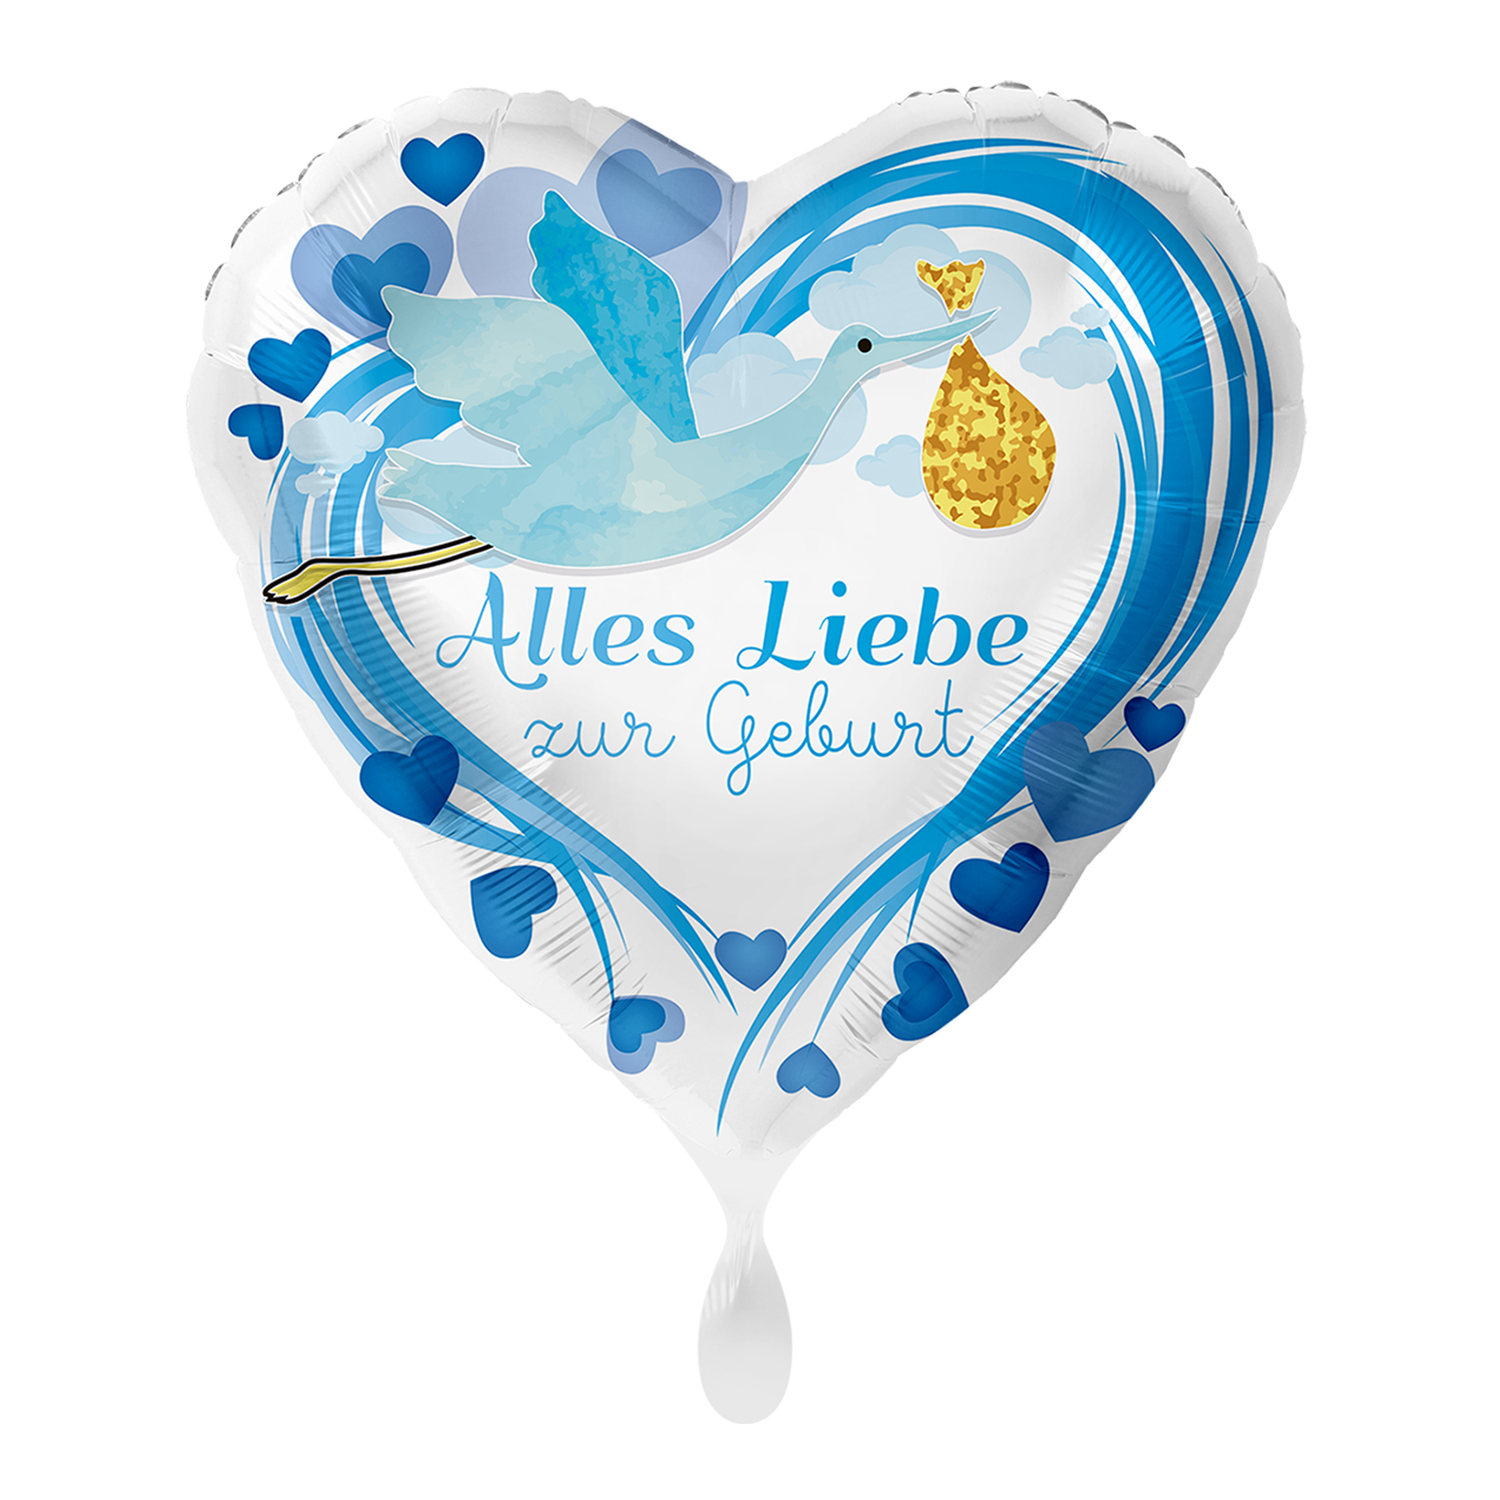 NEU Folienballon Blau - Alles Liebe zur Geburt - ca. 45cm Durchmesser